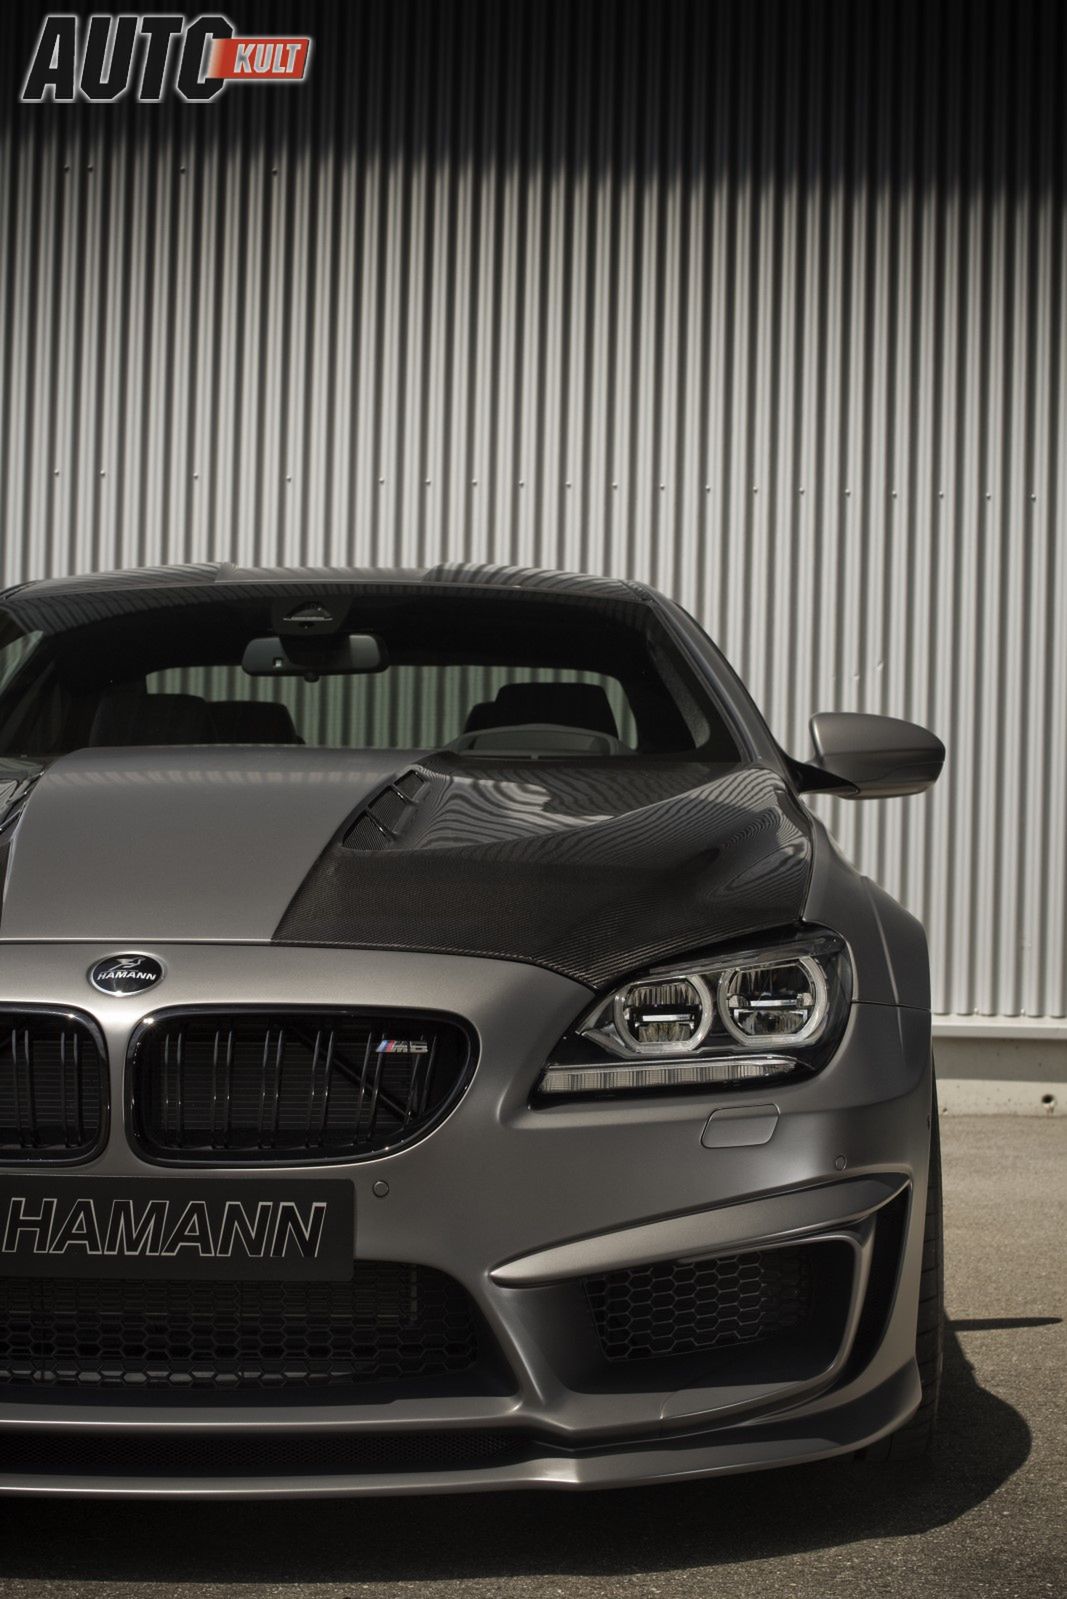 Hamann Mirr6r na bazie BMW M6 - test [galeria]